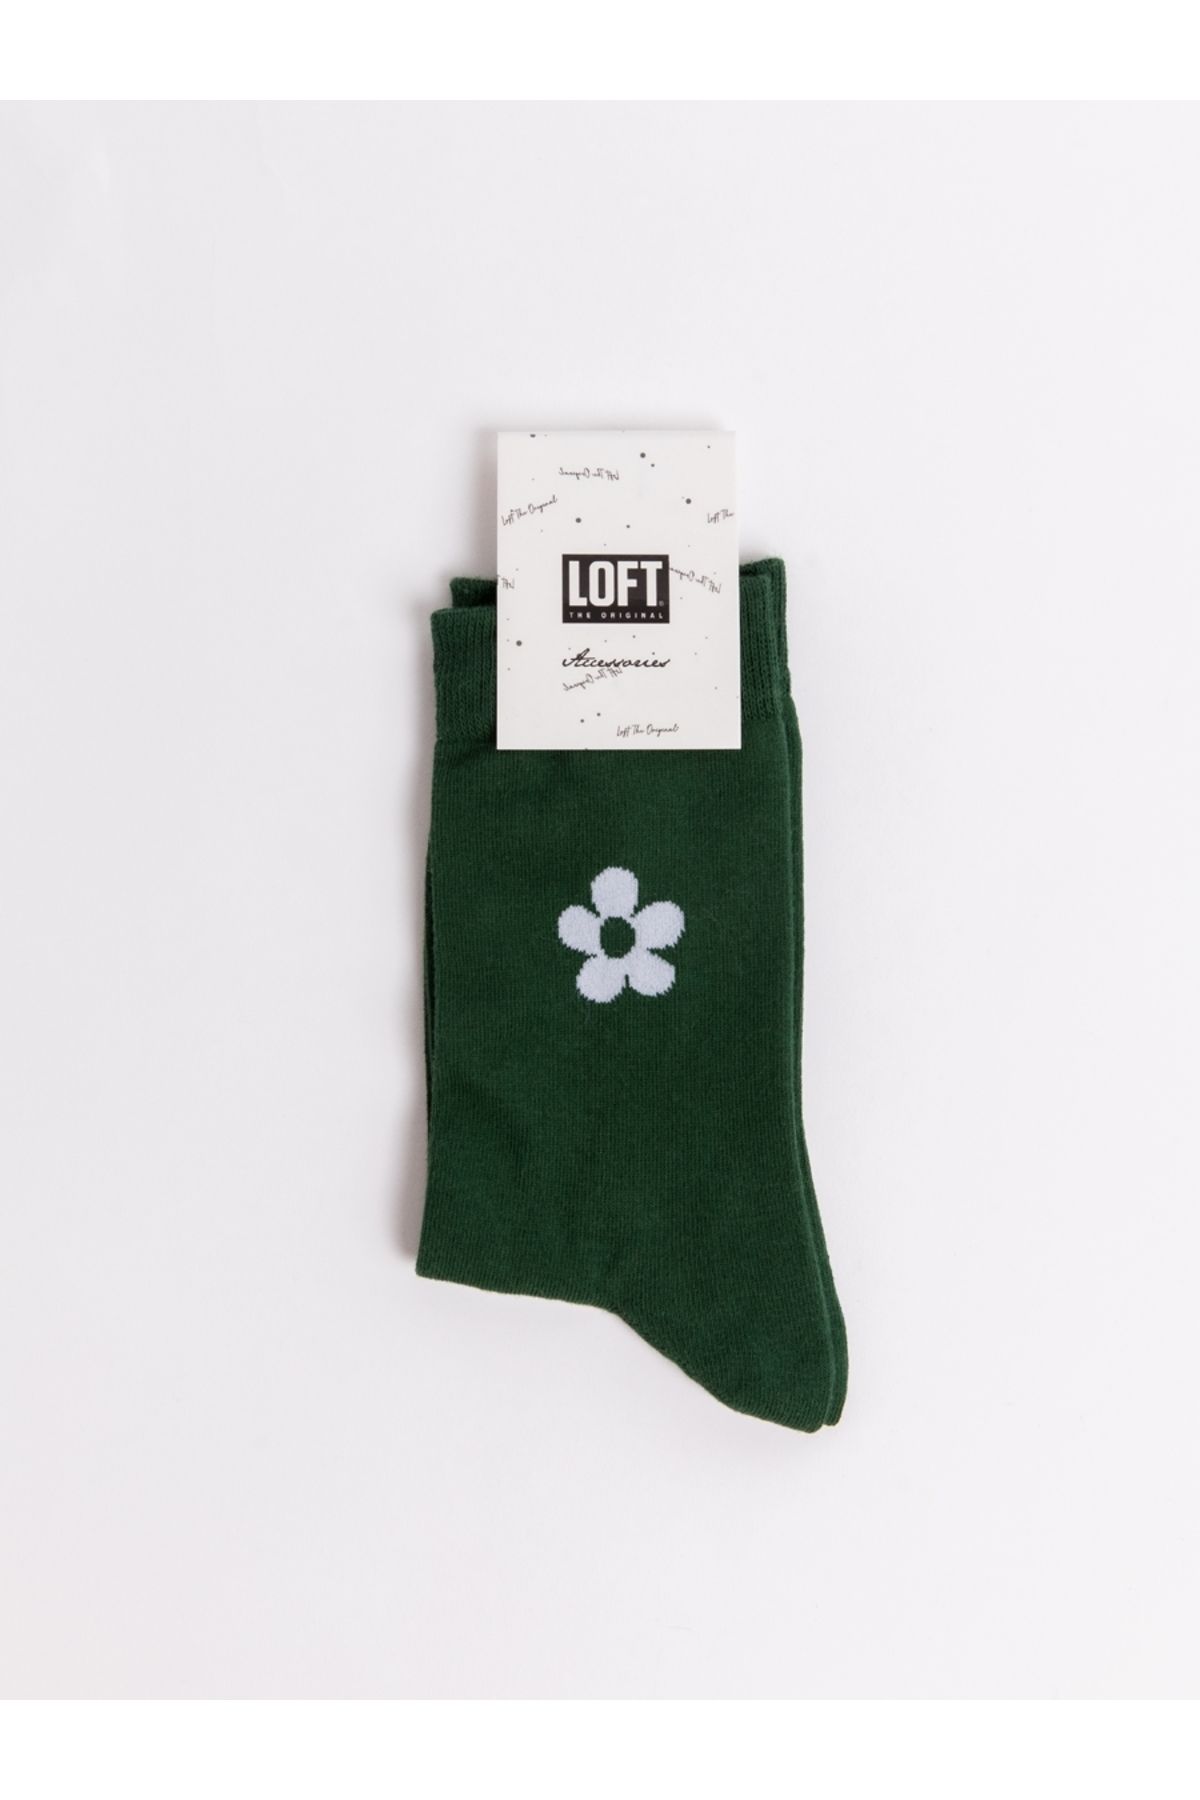 Loft Lf2034409 Kadın Çorap Green